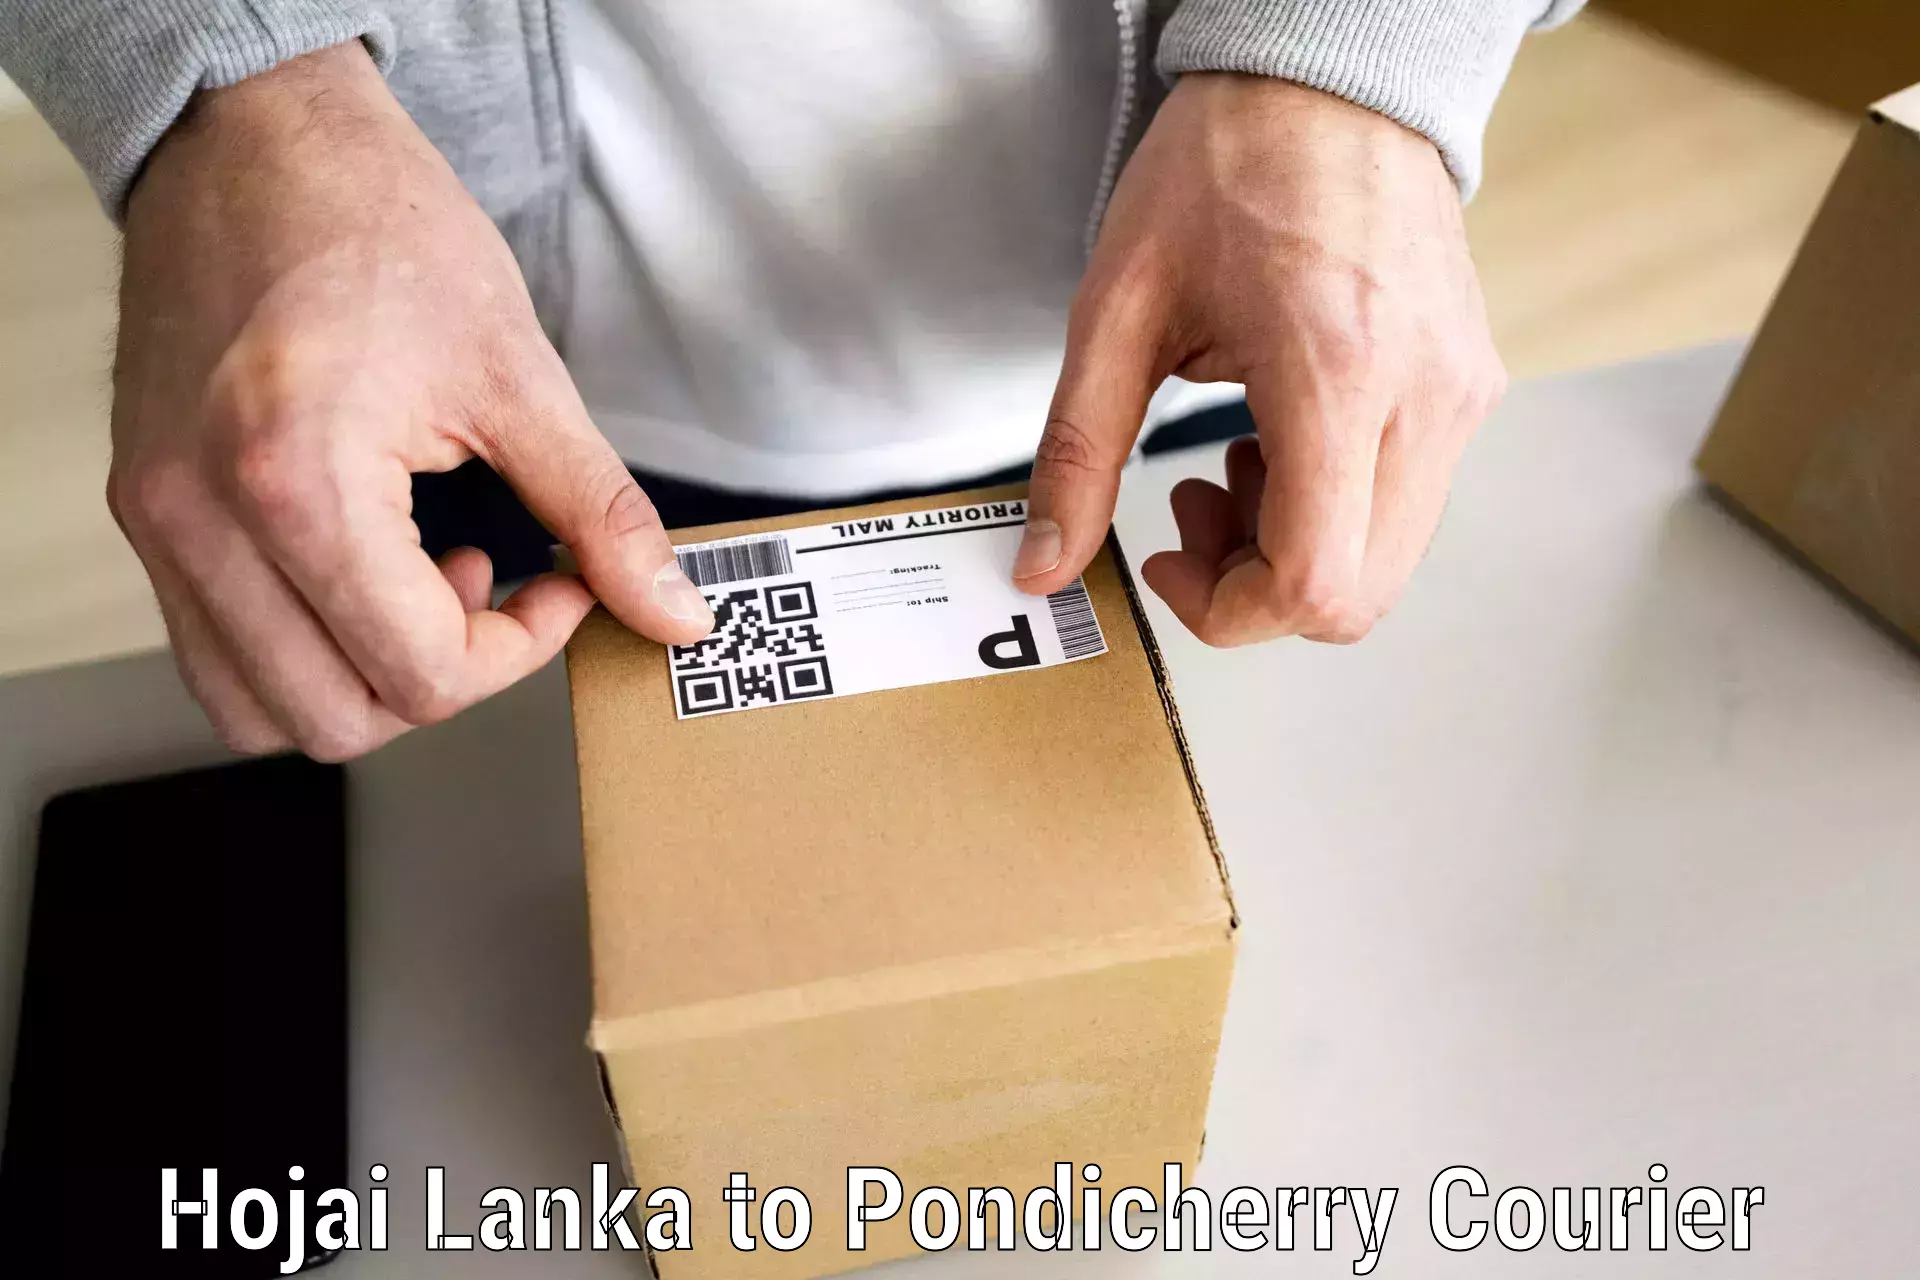 Home relocation experts Hojai Lanka to Pondicherry